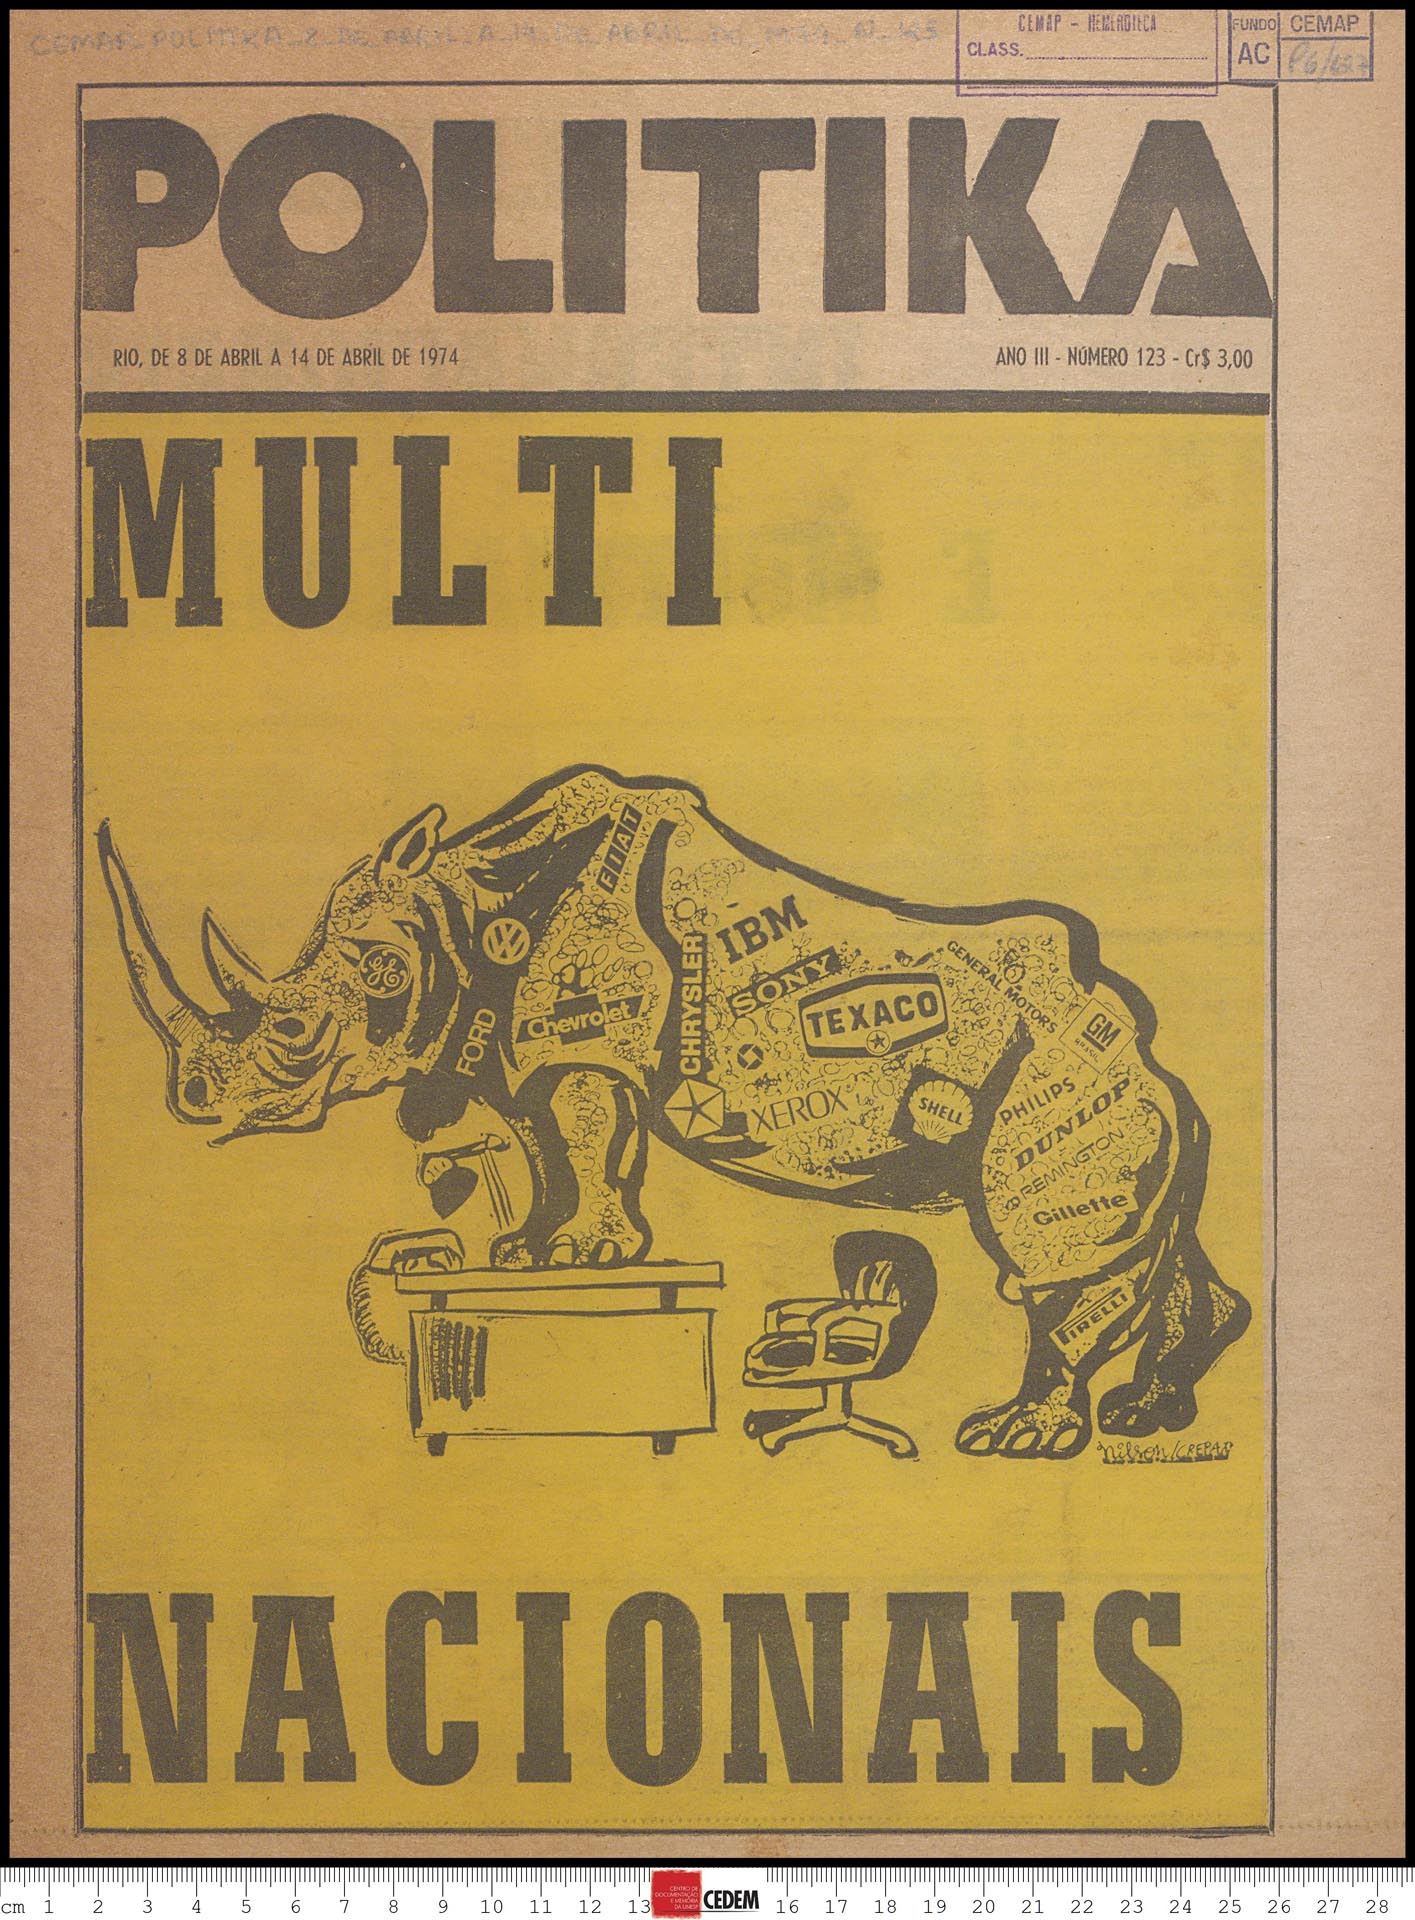 Politika - 123 - 8 a 14 de abr. 1974